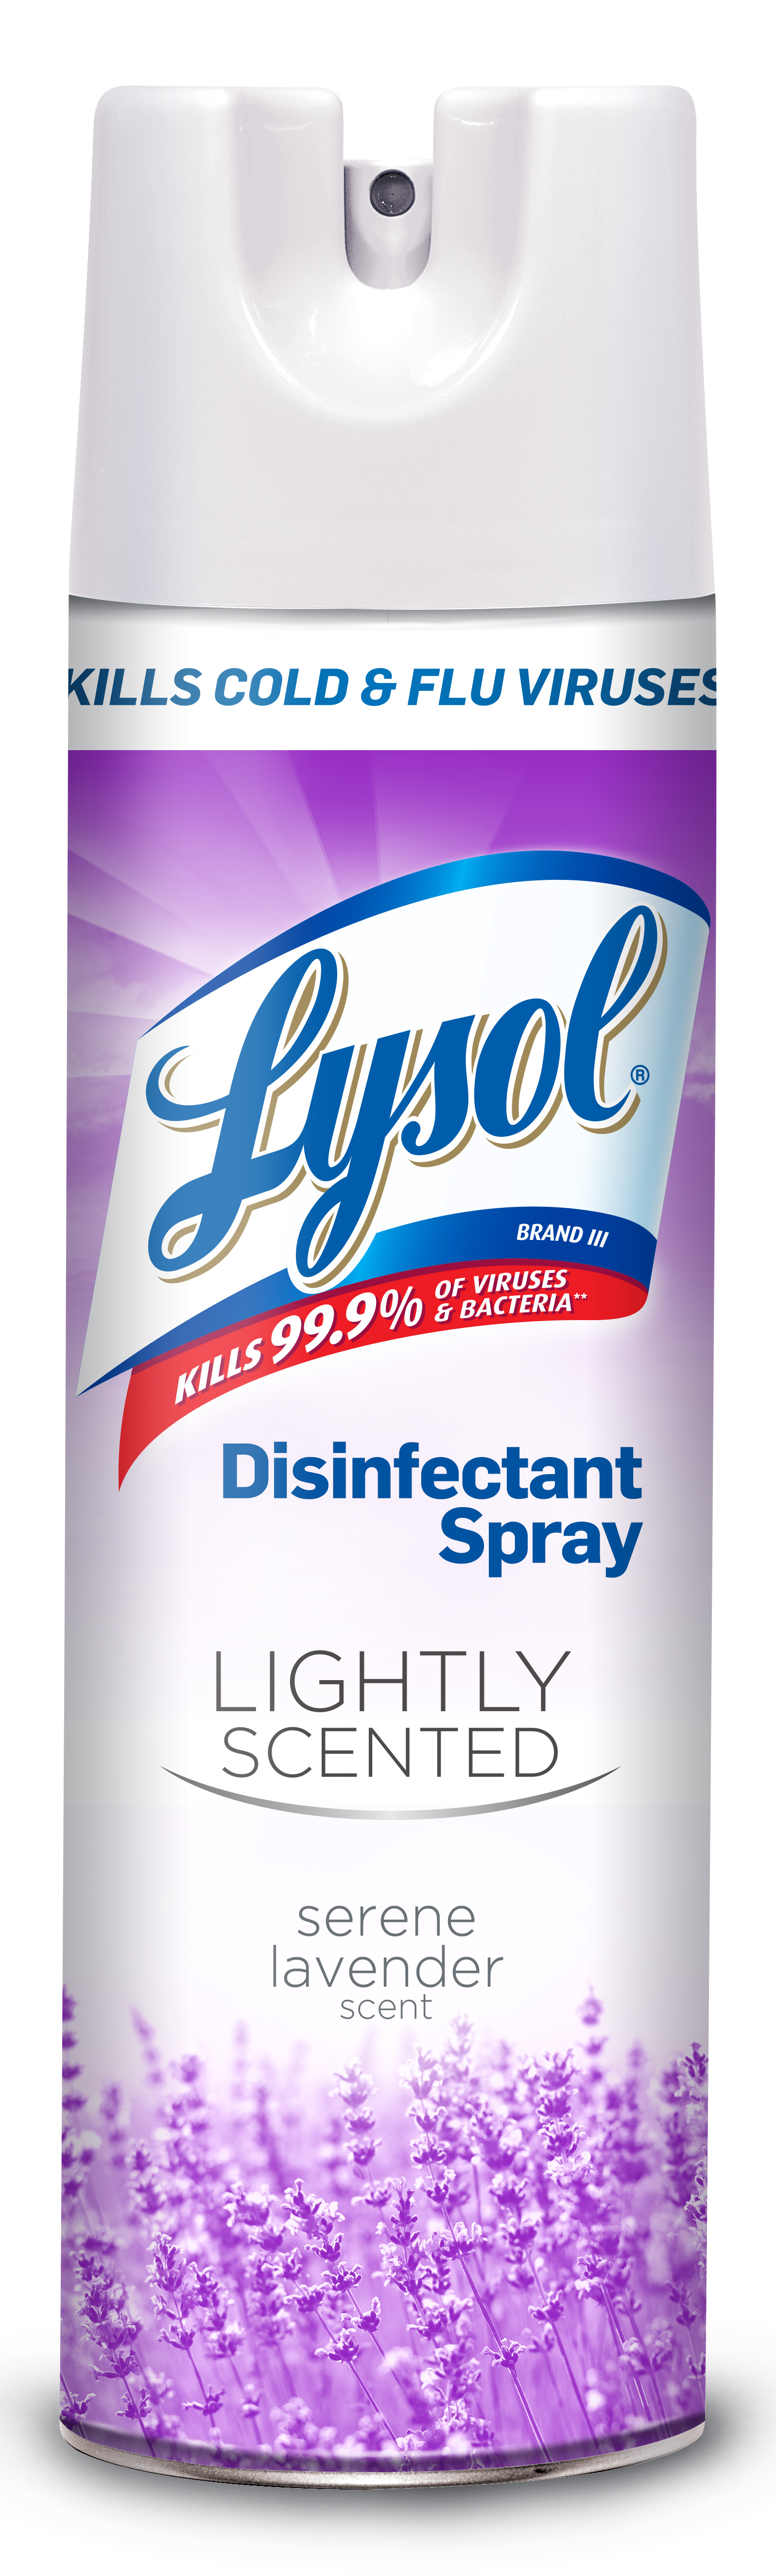 LYSOL® Disinfectant Spray Lightly Scented - Serene Lavender